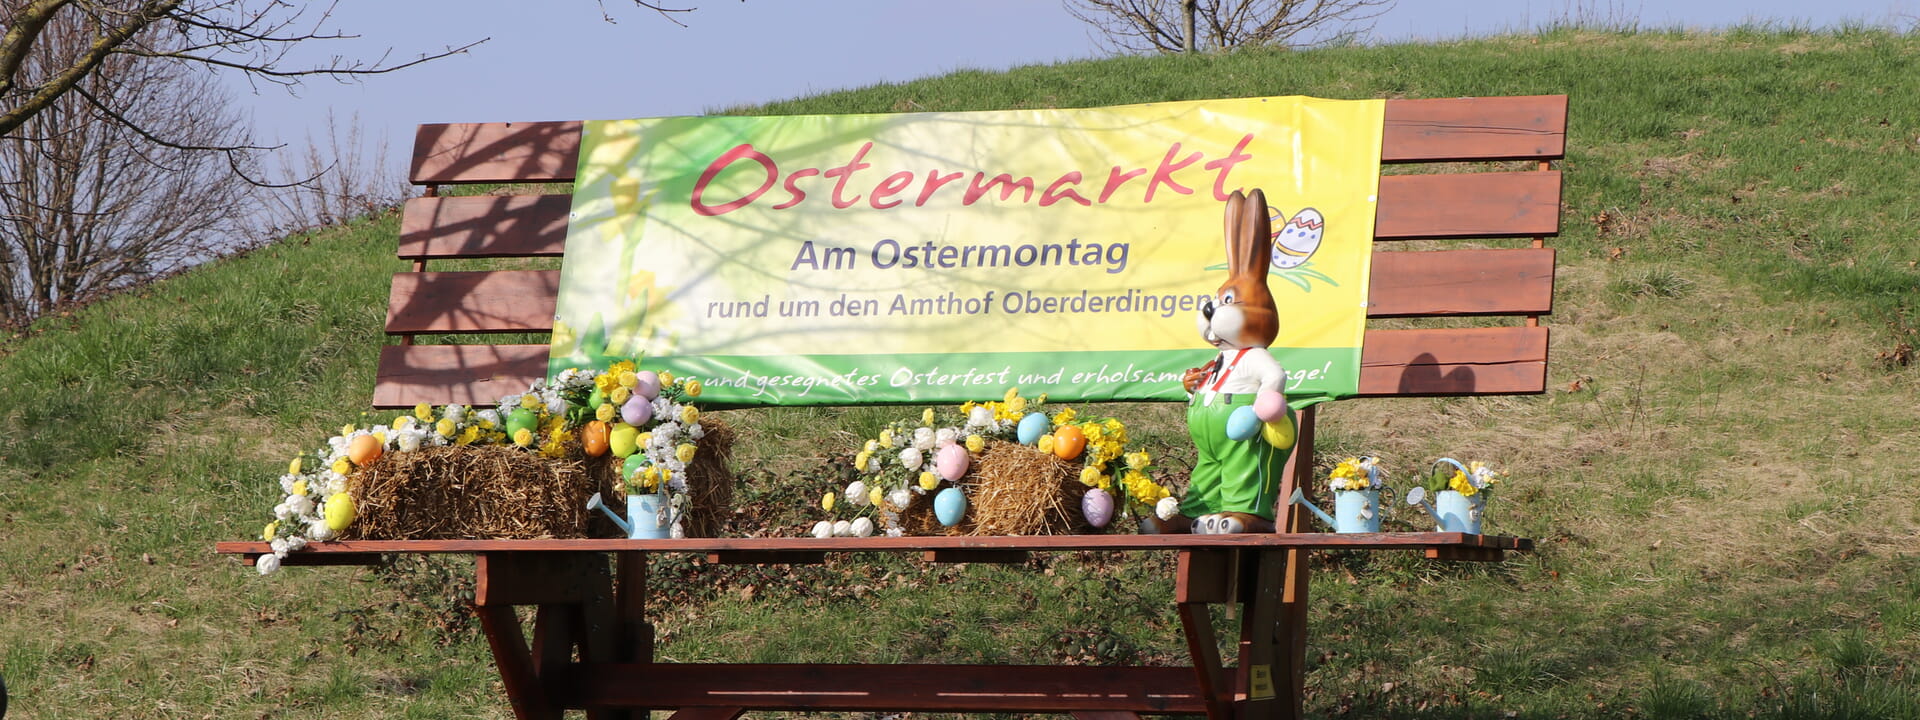 Ostermarkt in Oberderdingen !